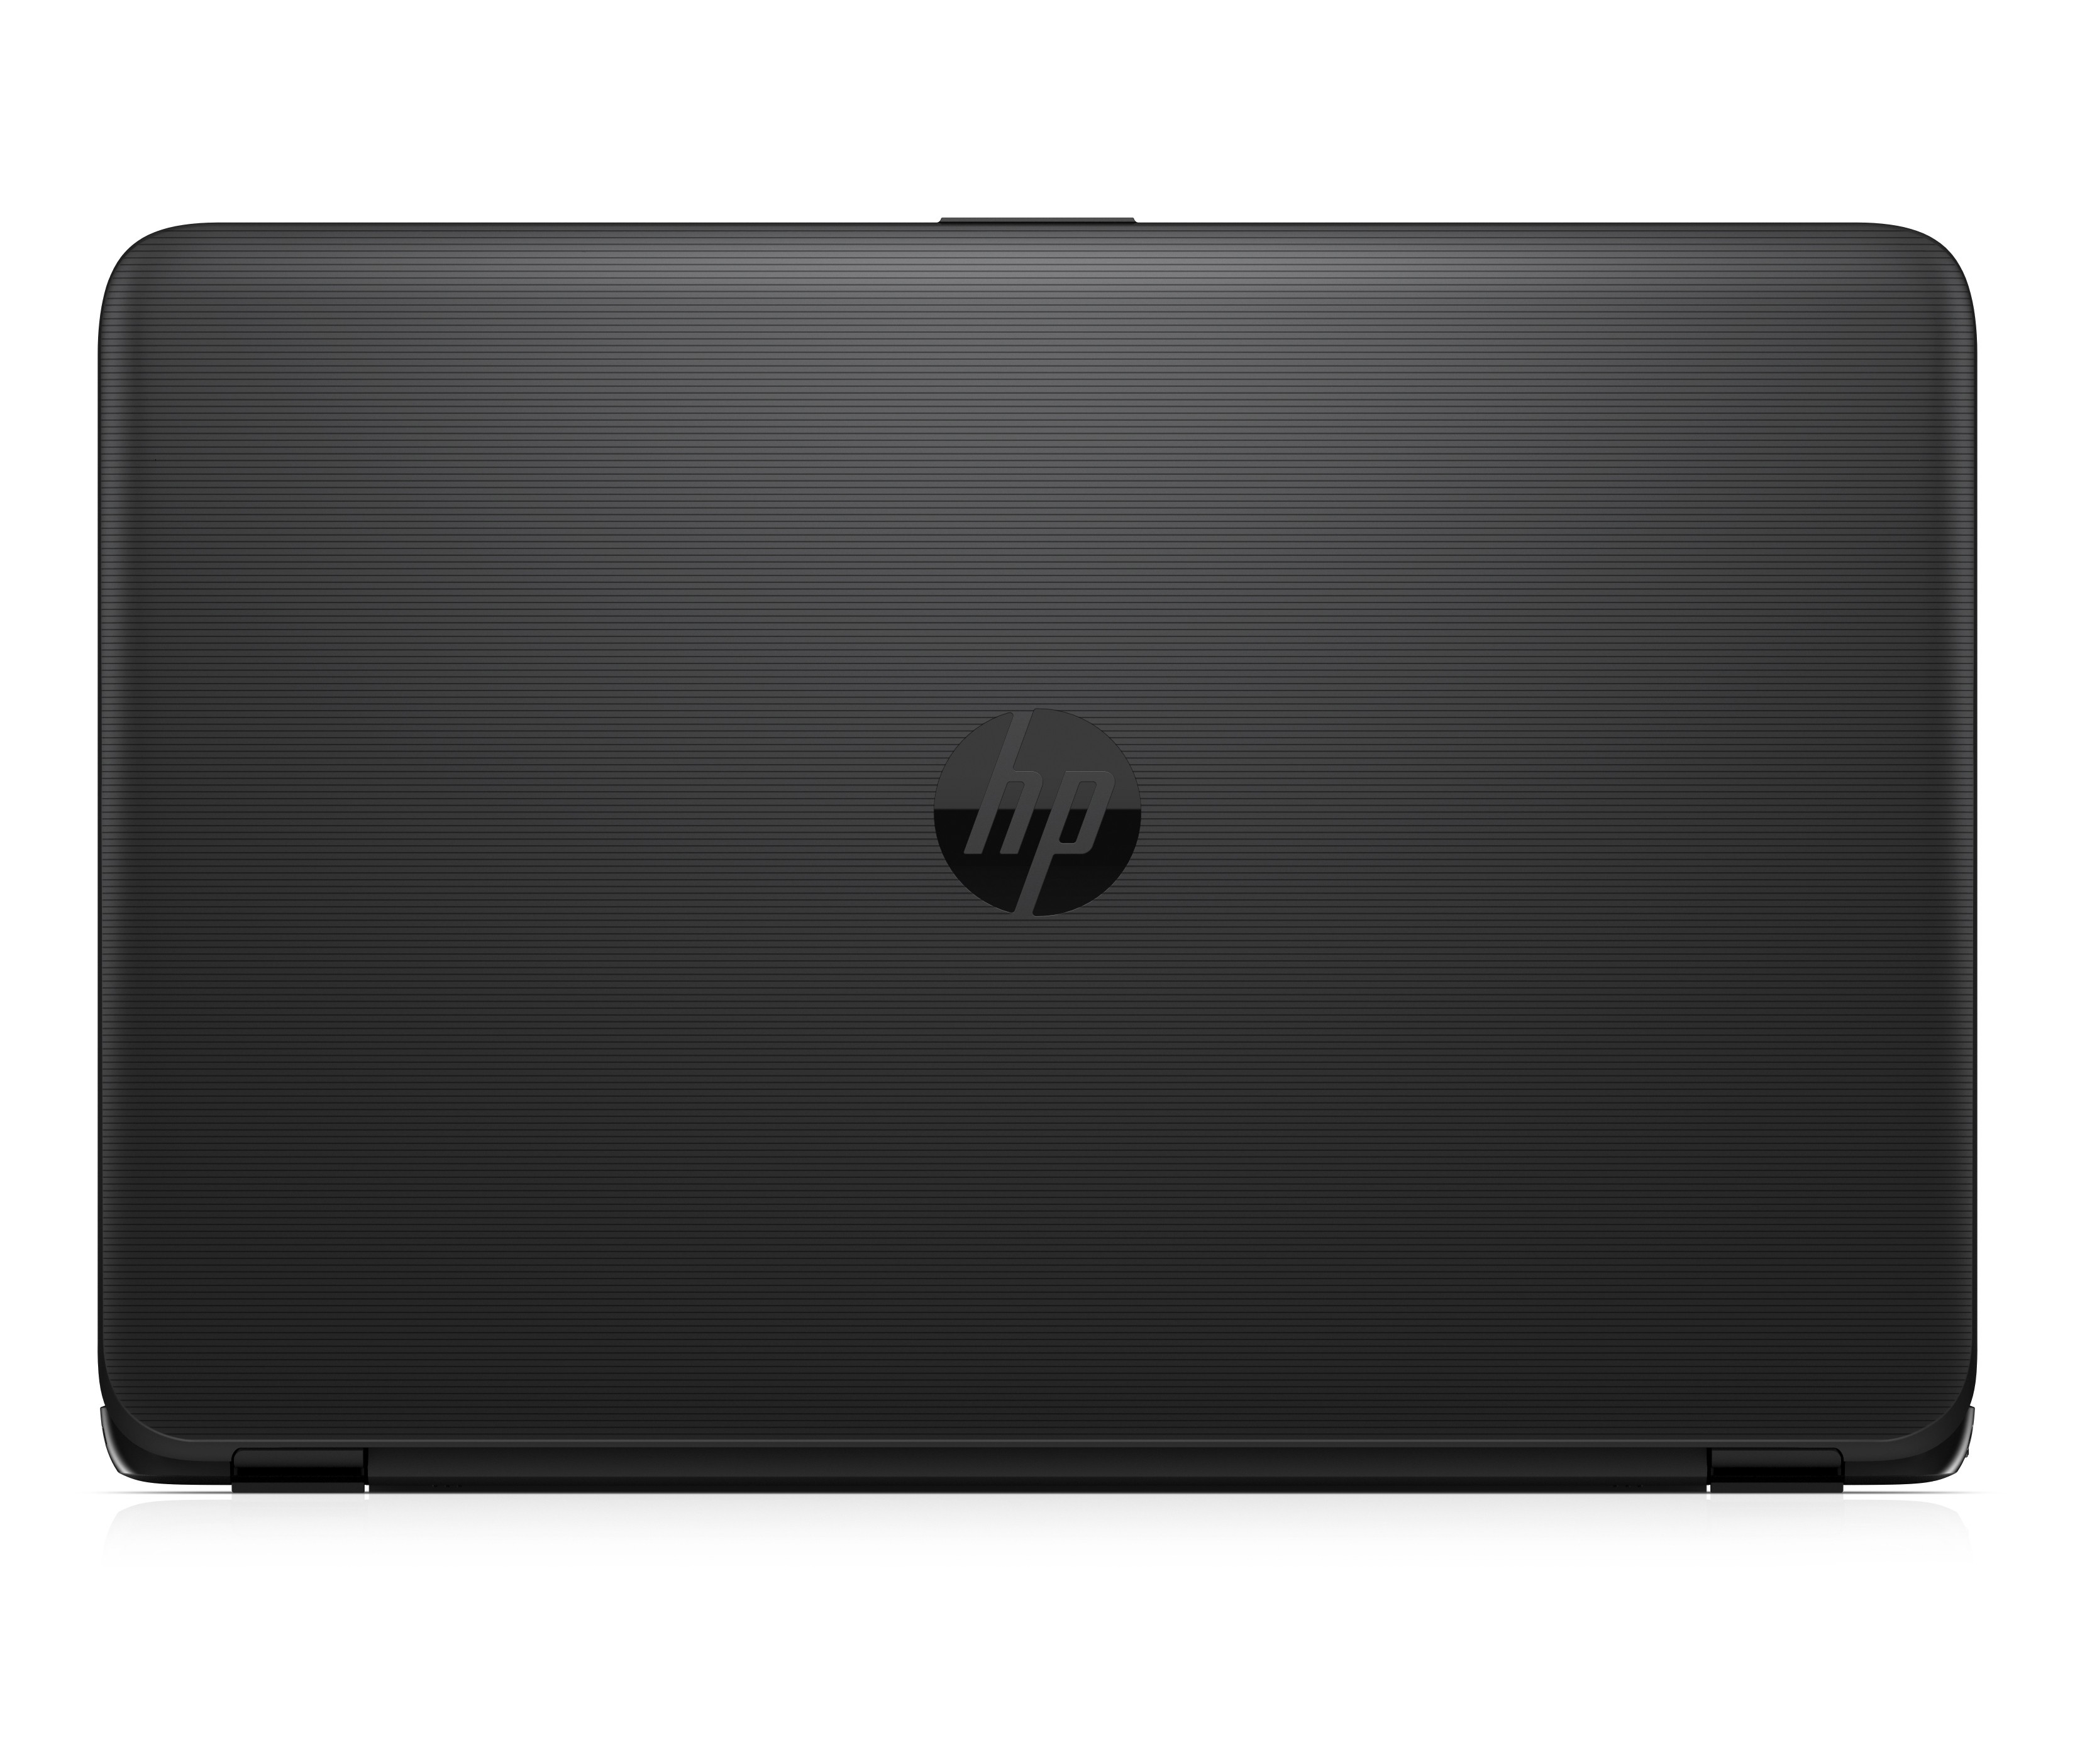 Portátil HP Notebook 15-ay101nm i7-7500U 4GB 500GB 15.6 Reacondicionado